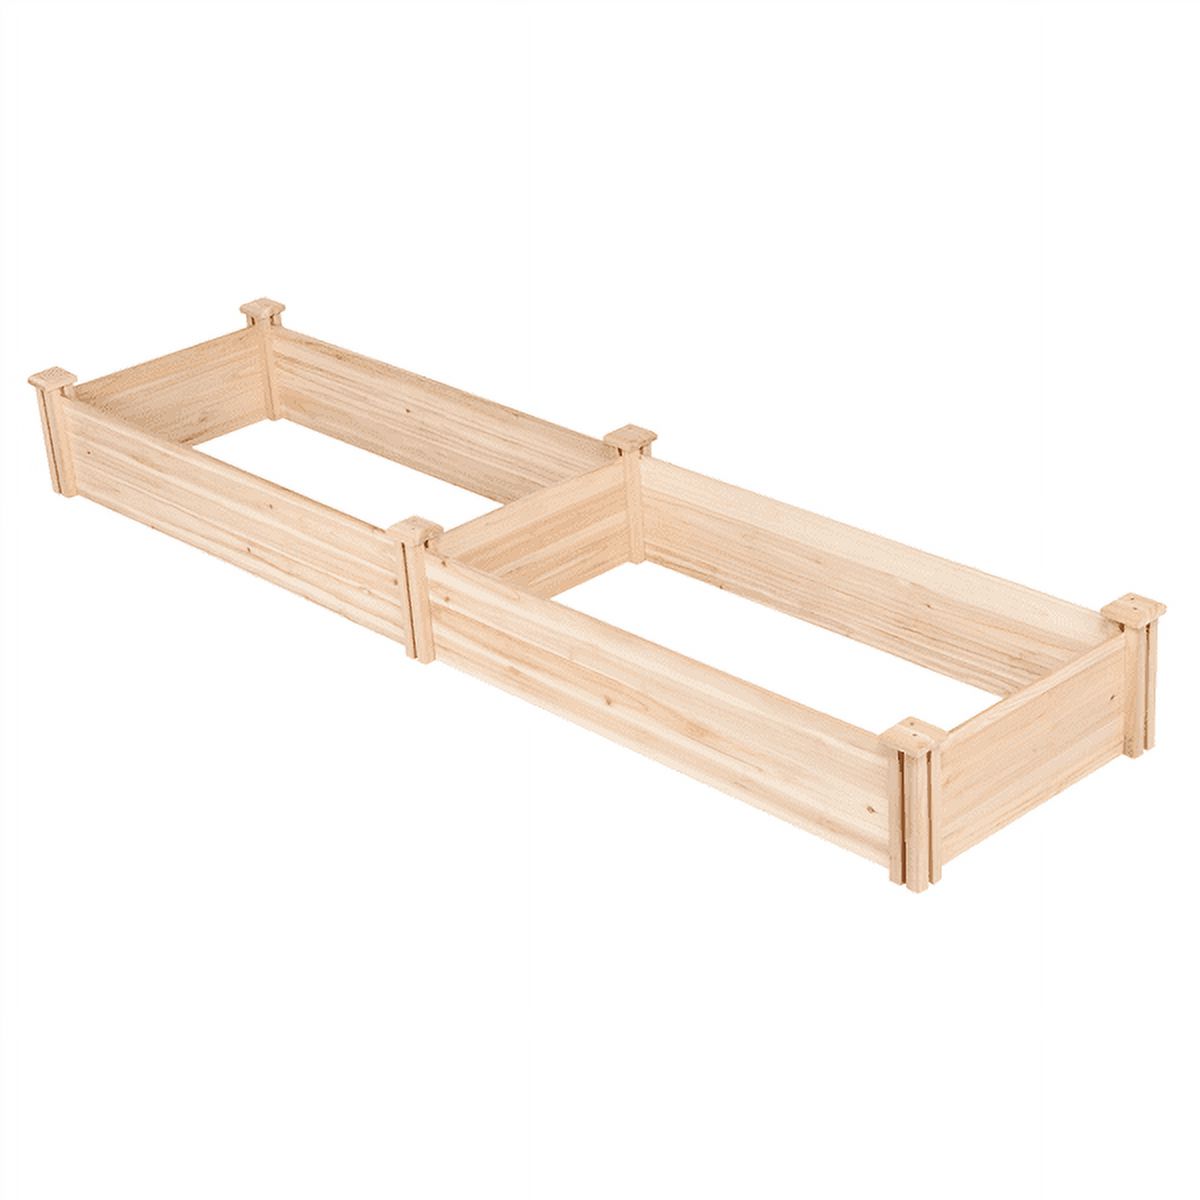 Alden Design Wooden Raised Garden Bed Planter Box for Patio Yard,Natural Wood - image 3 of 6